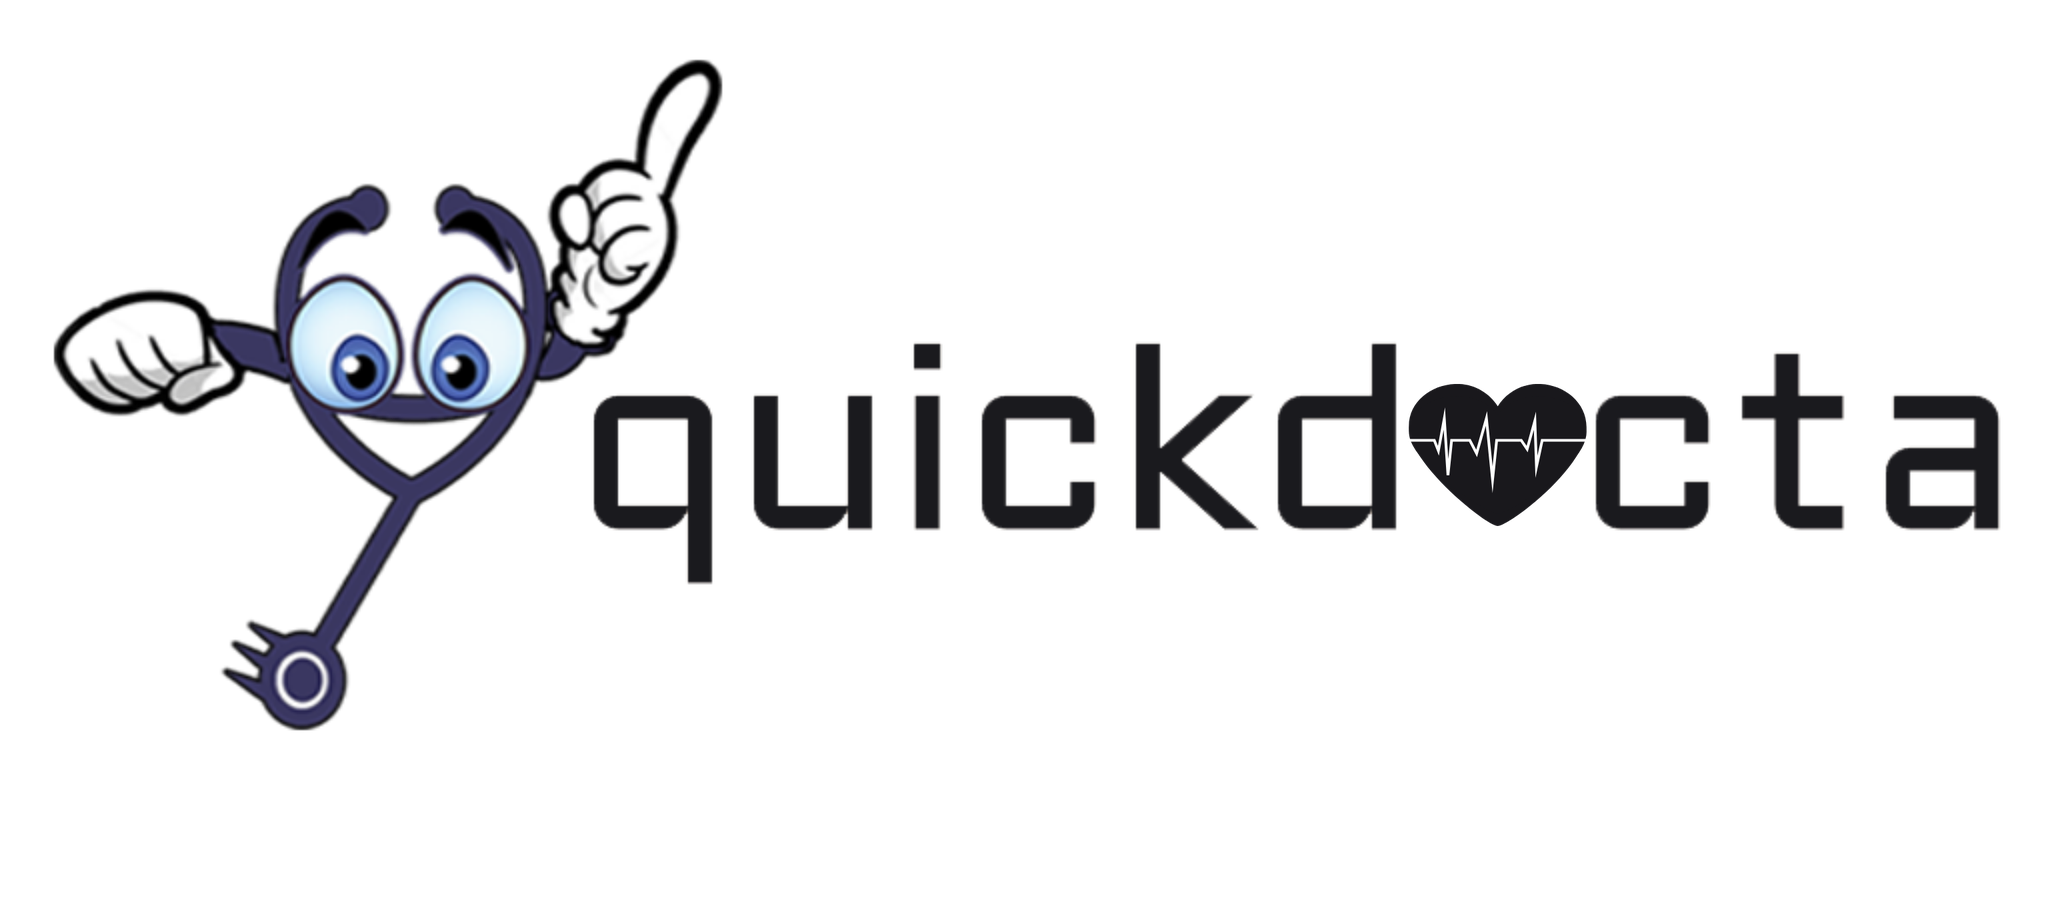 QuickDocta